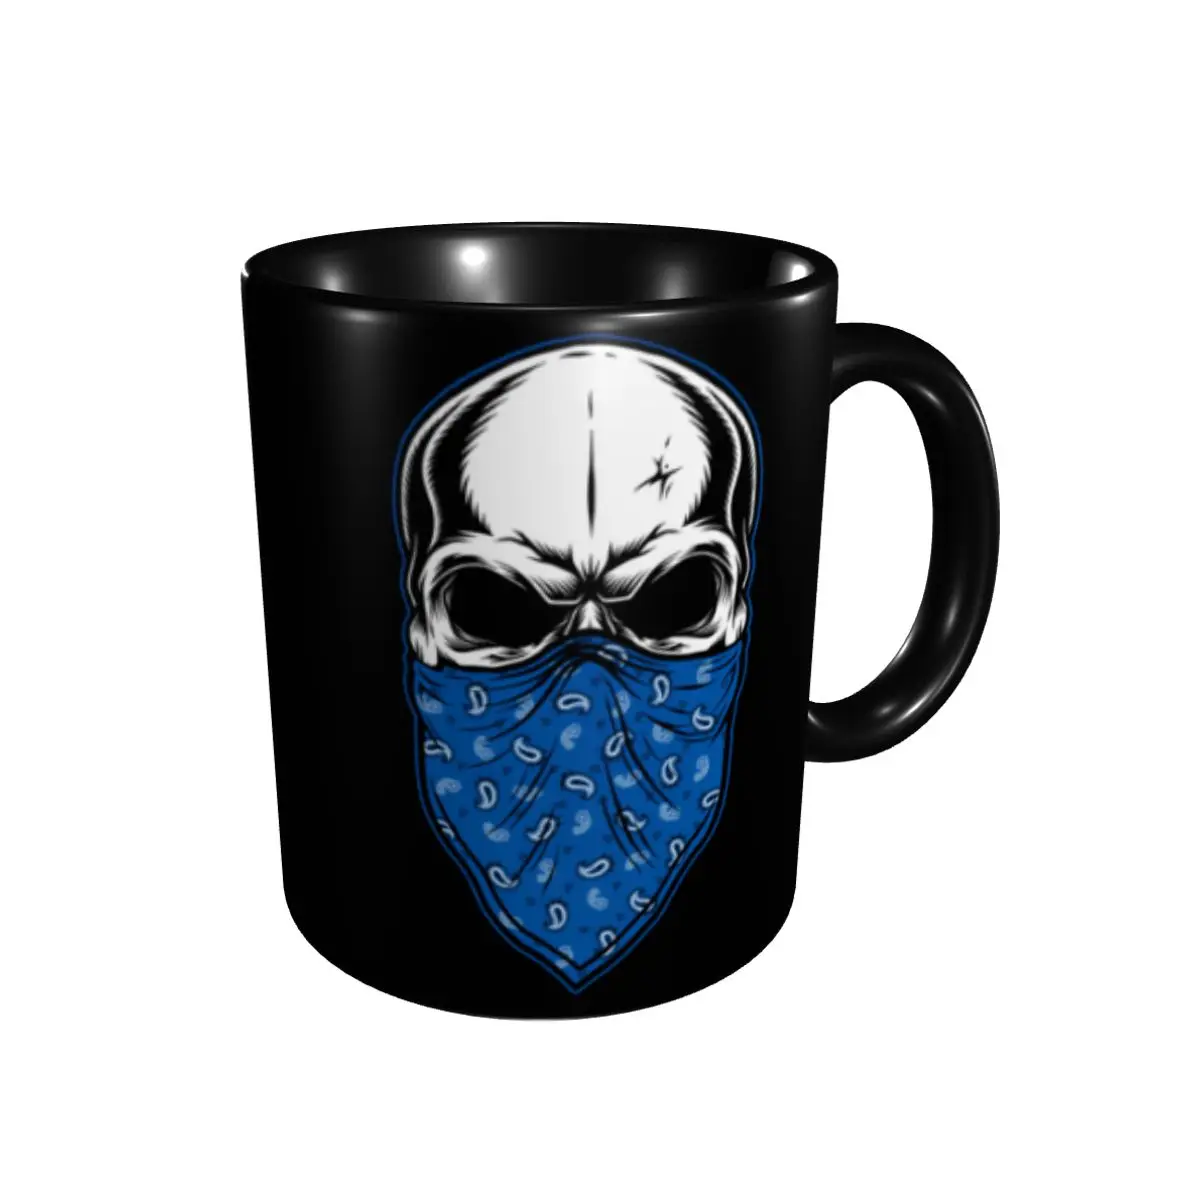 Promo CRIPS Skull W Bandana Mugs Funny Cups Mugs Print Funny Novelty R346 multi-function cups